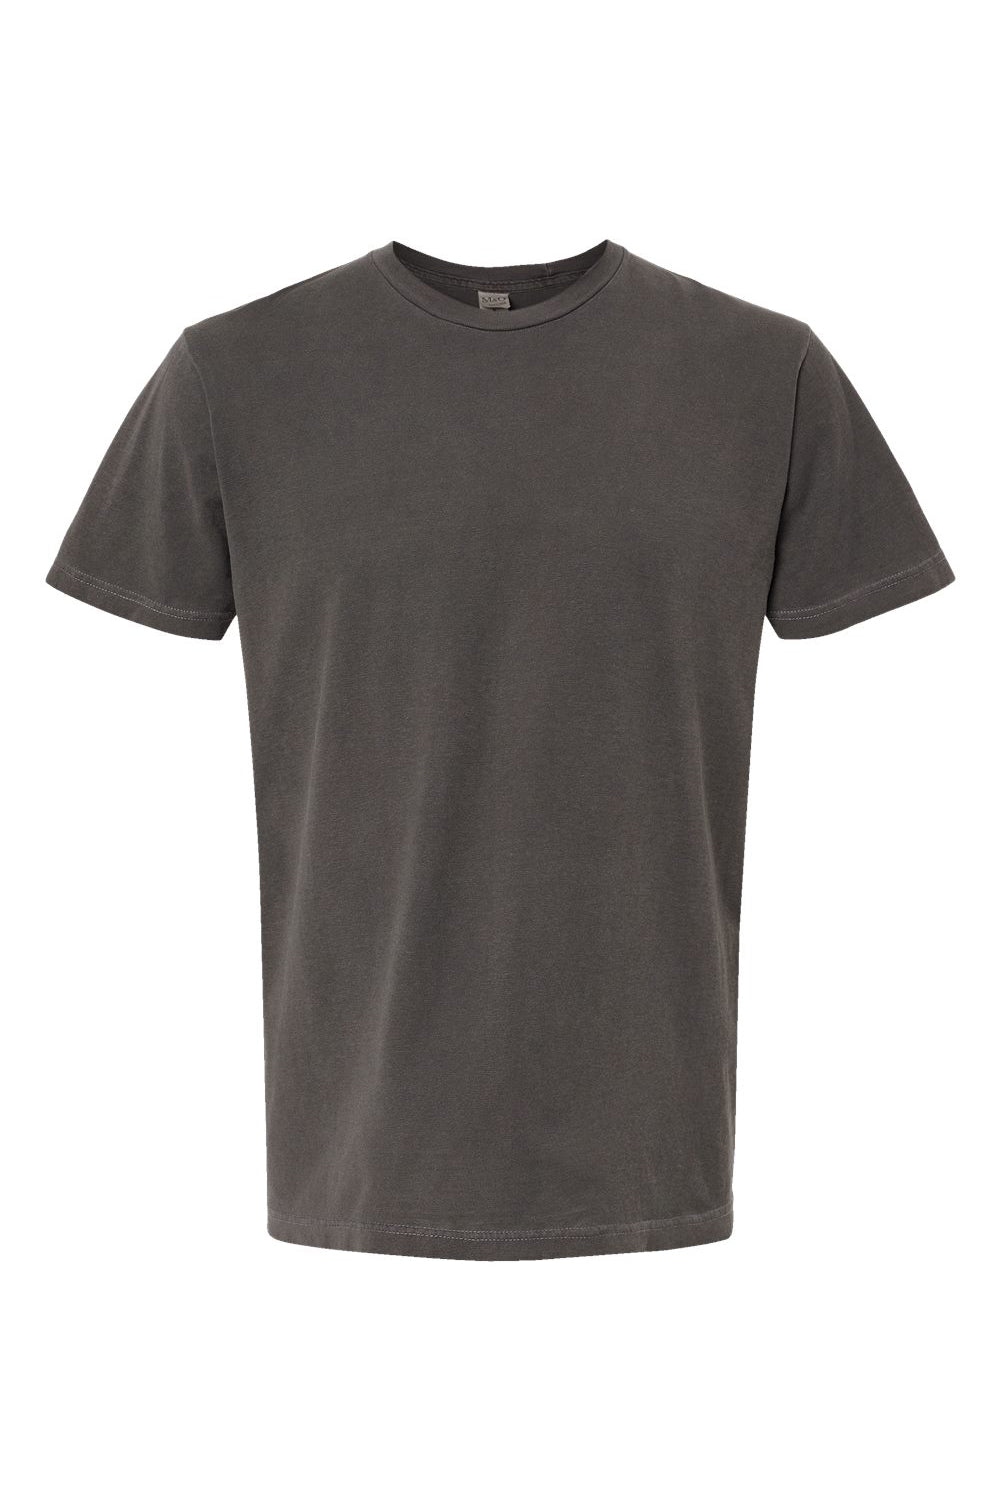 M&O 6500M Mens Vintage Garment Dyed Short Sleeve Crewneck T-Shirt Charcoal Grey Flat Front